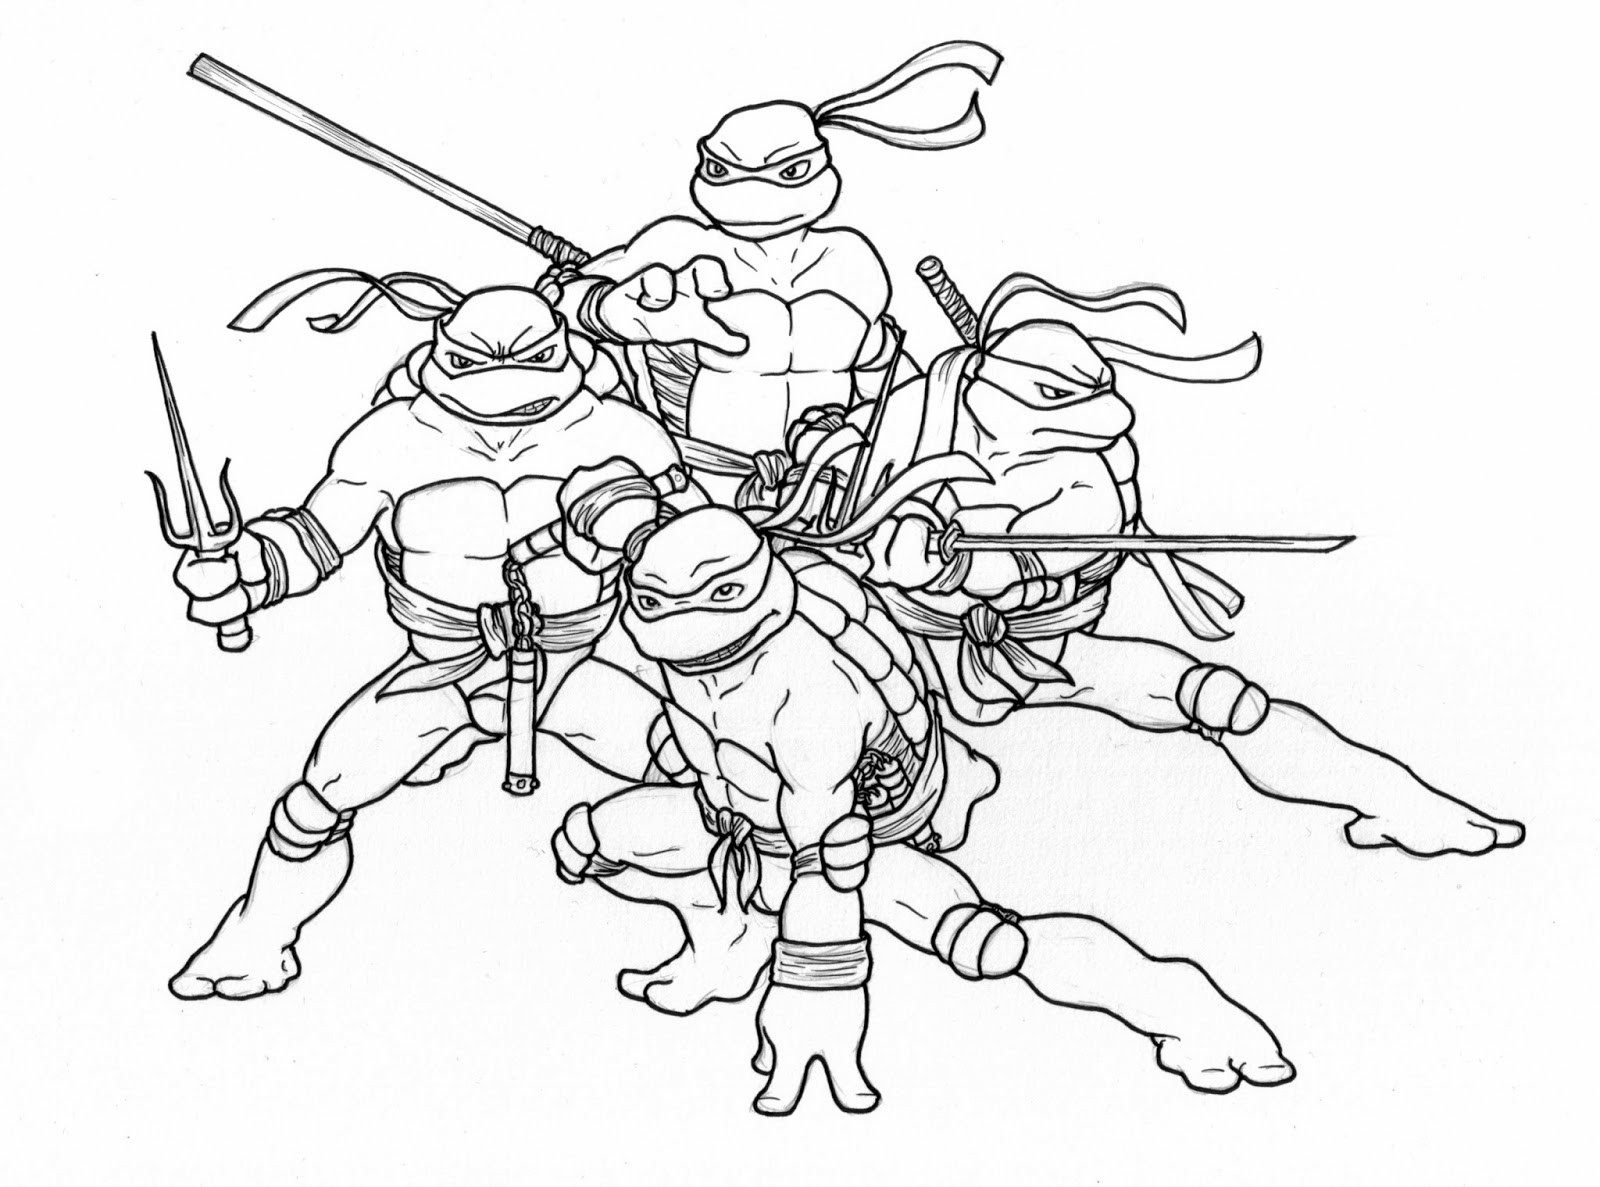 Teenage Mutant Ninja Turtles Coloring Book
 Teenage Mutant Ninja Turtle Coloring Pages coloringsuite